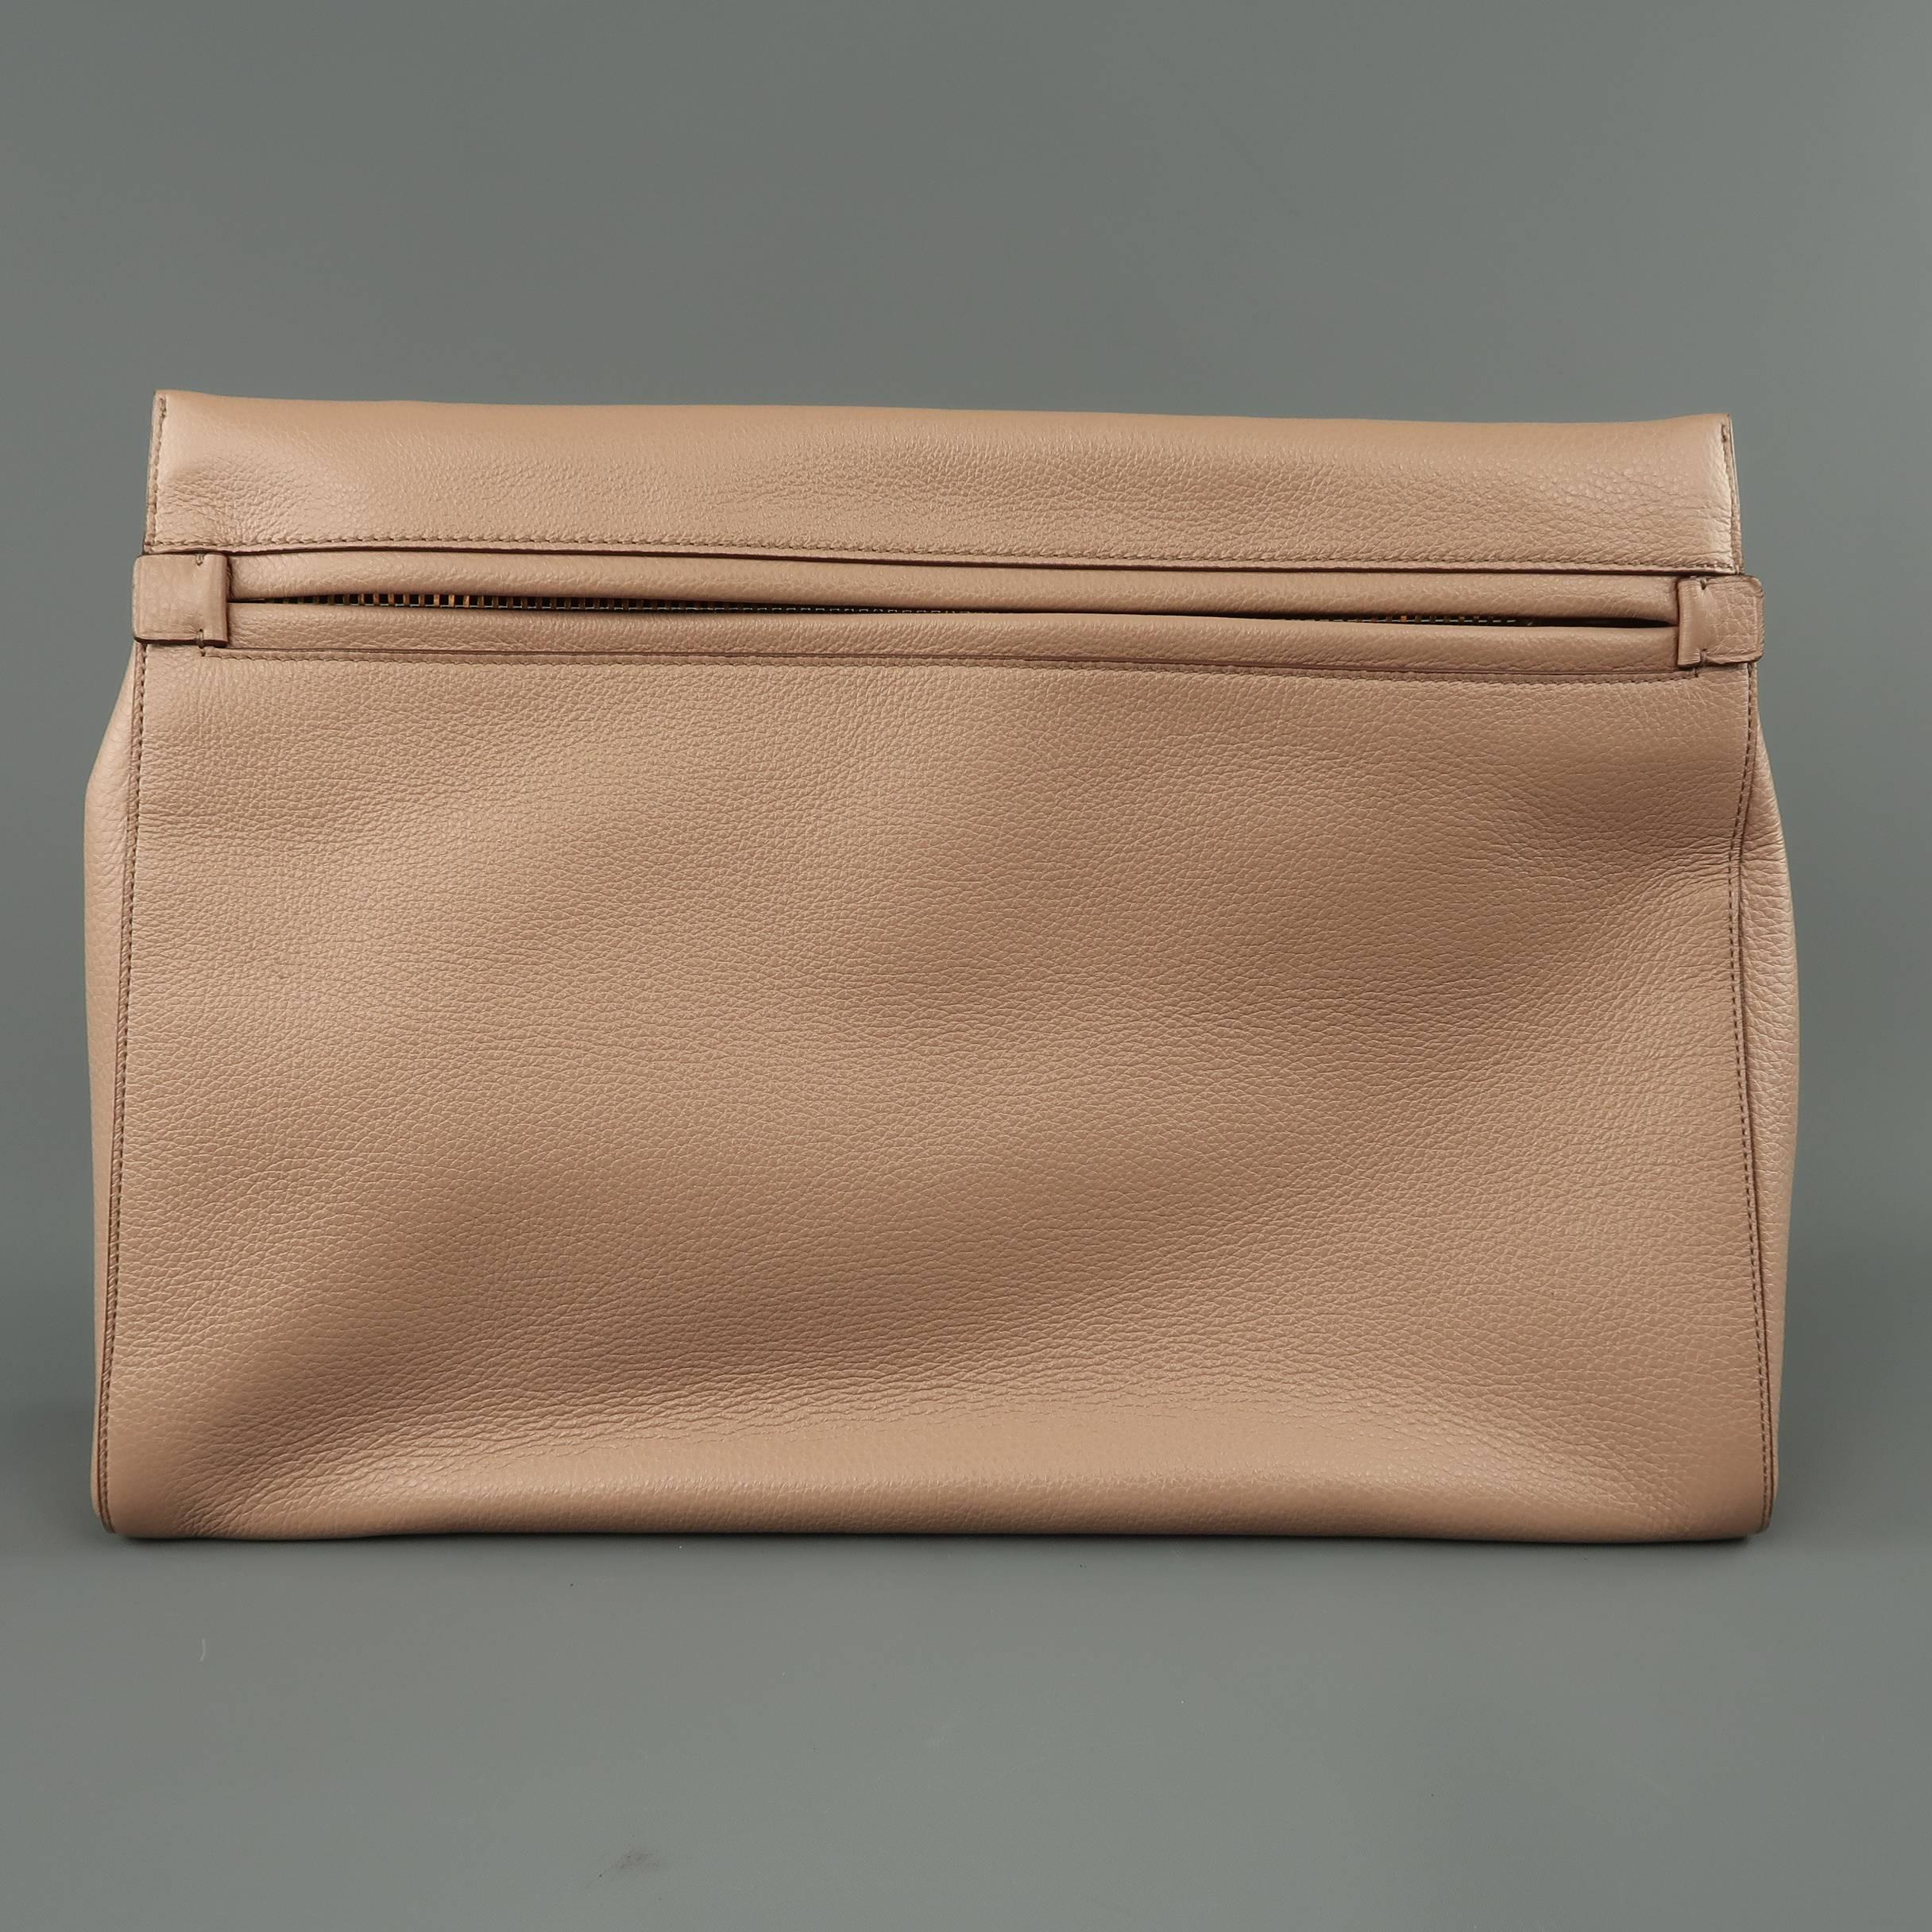 Tom Ford Handbag - Alix - Nude Textured Leather Gold Padlock Clutch Bag 1